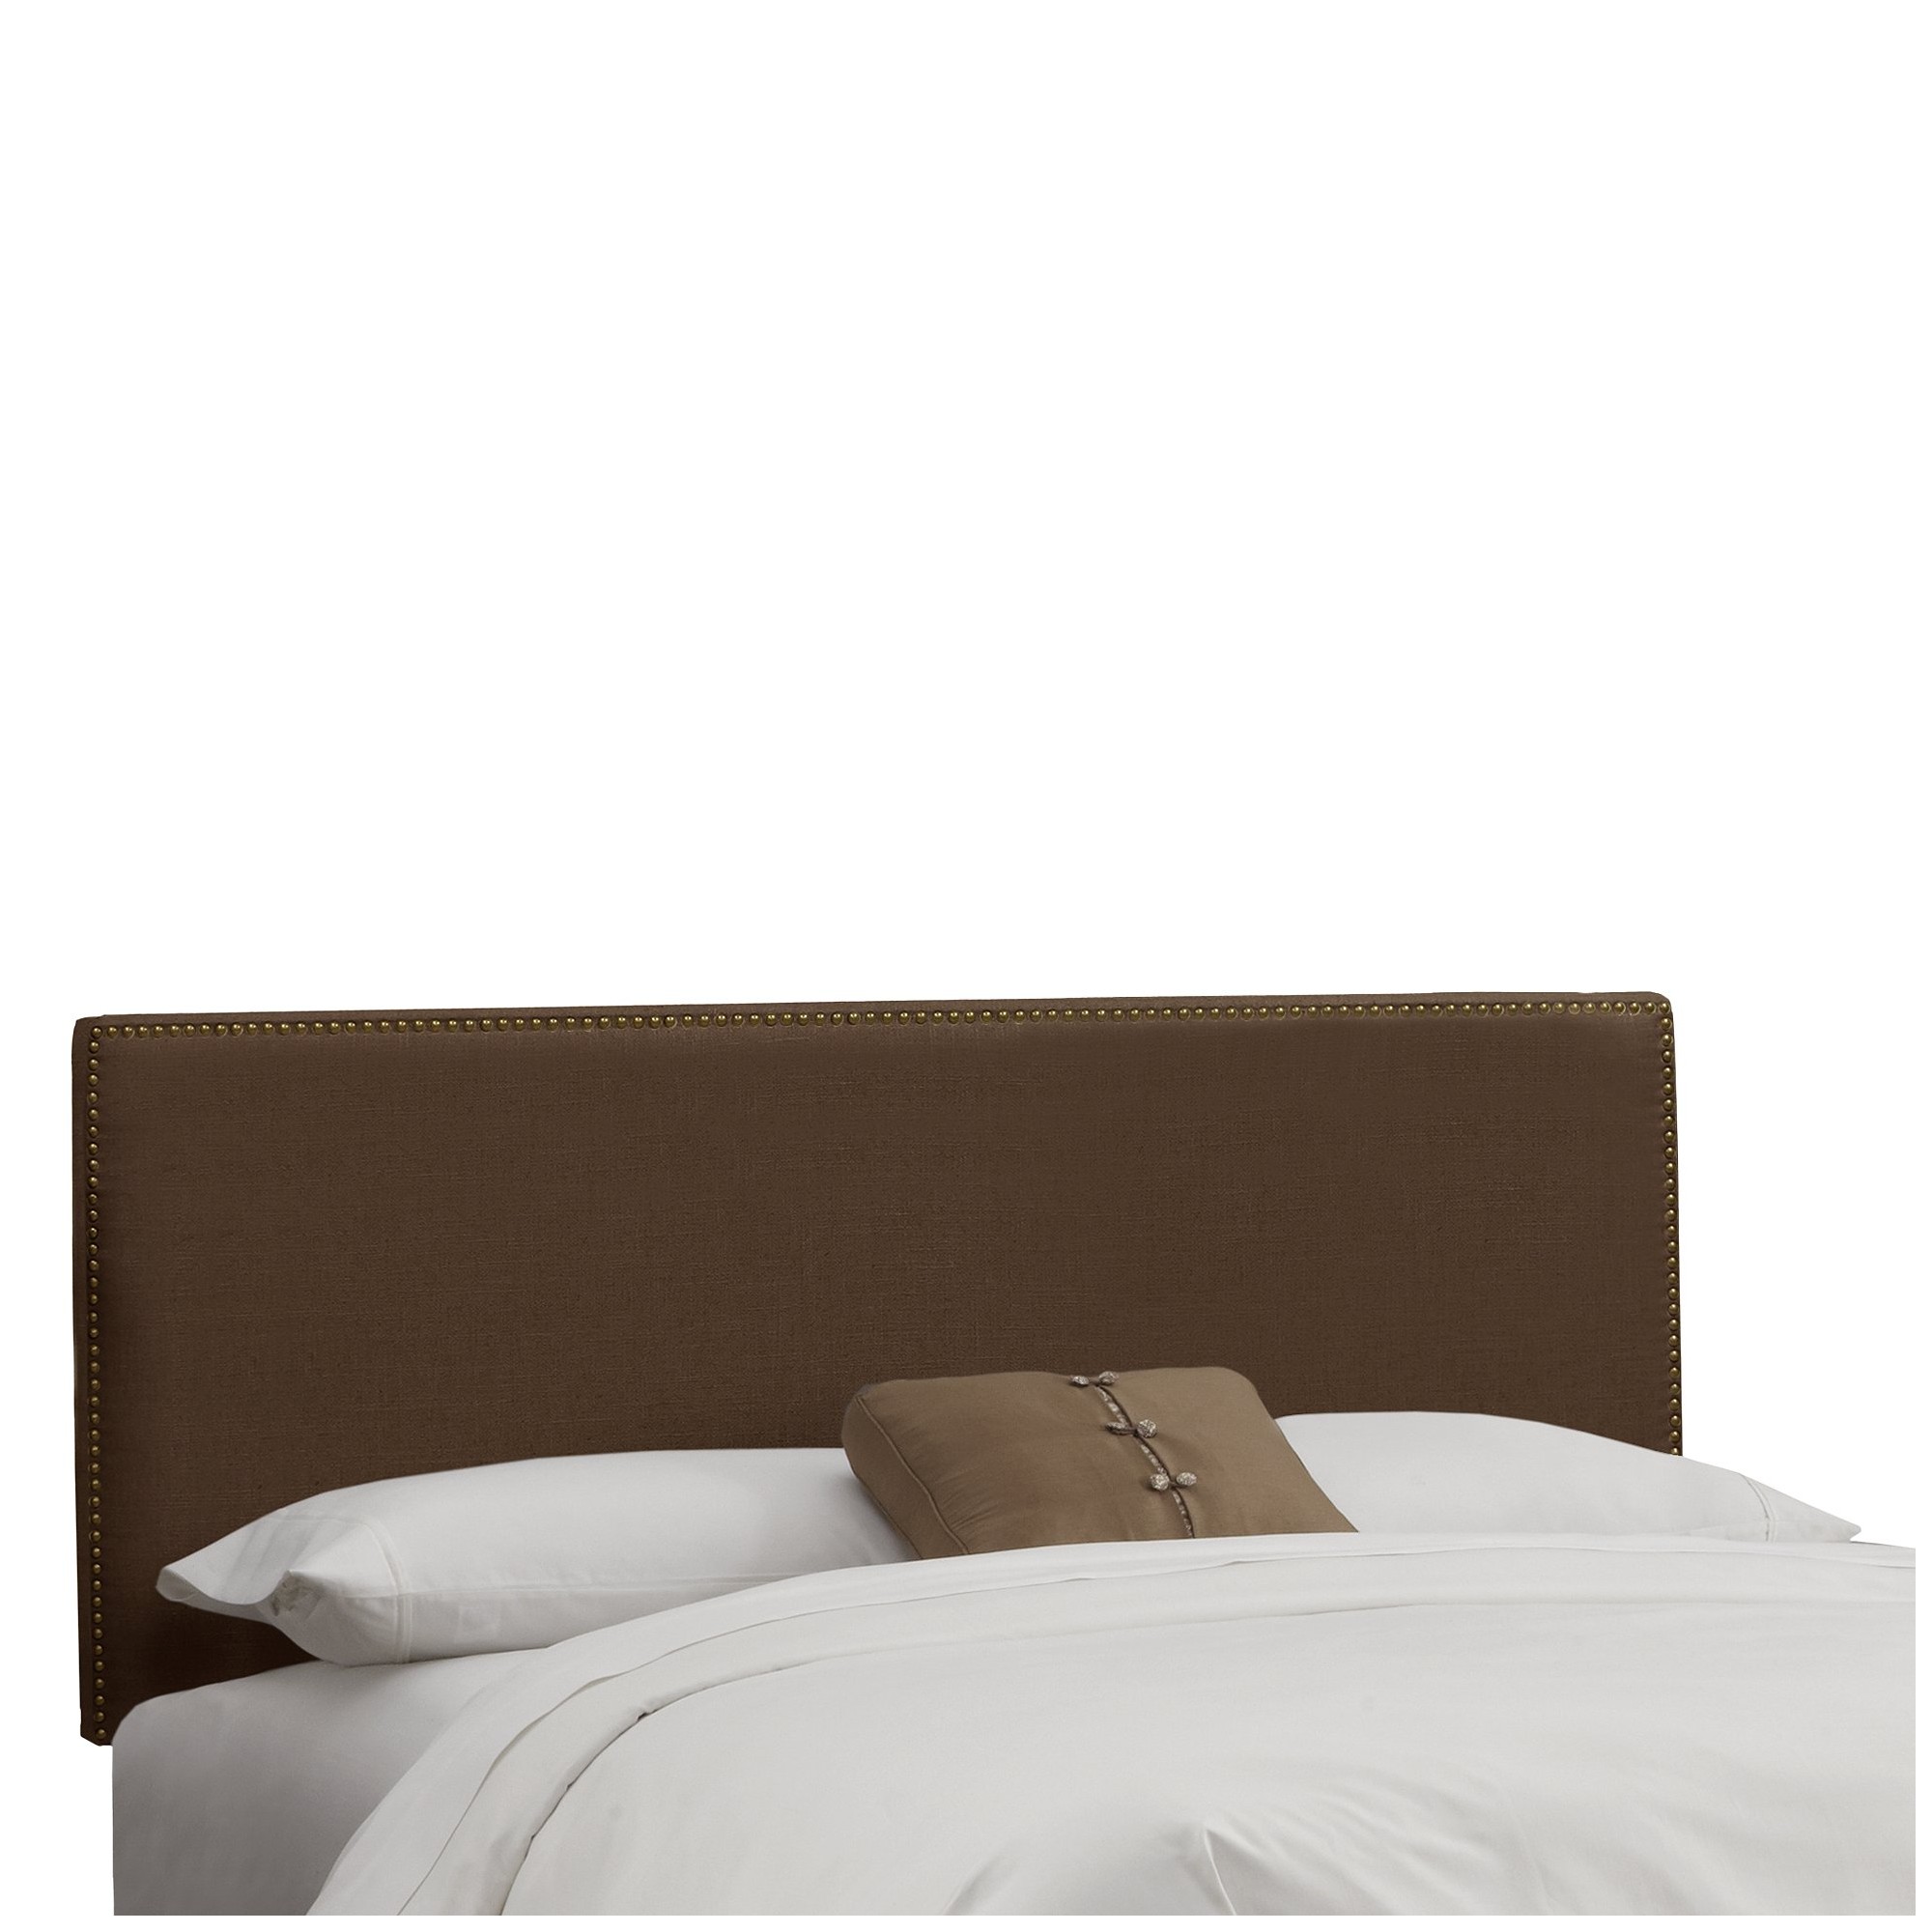 Full Arcadia Nailbutton Headboard Linen Chocolate with Brass Nail Buttons - Skyline Furniture, Linen Brown